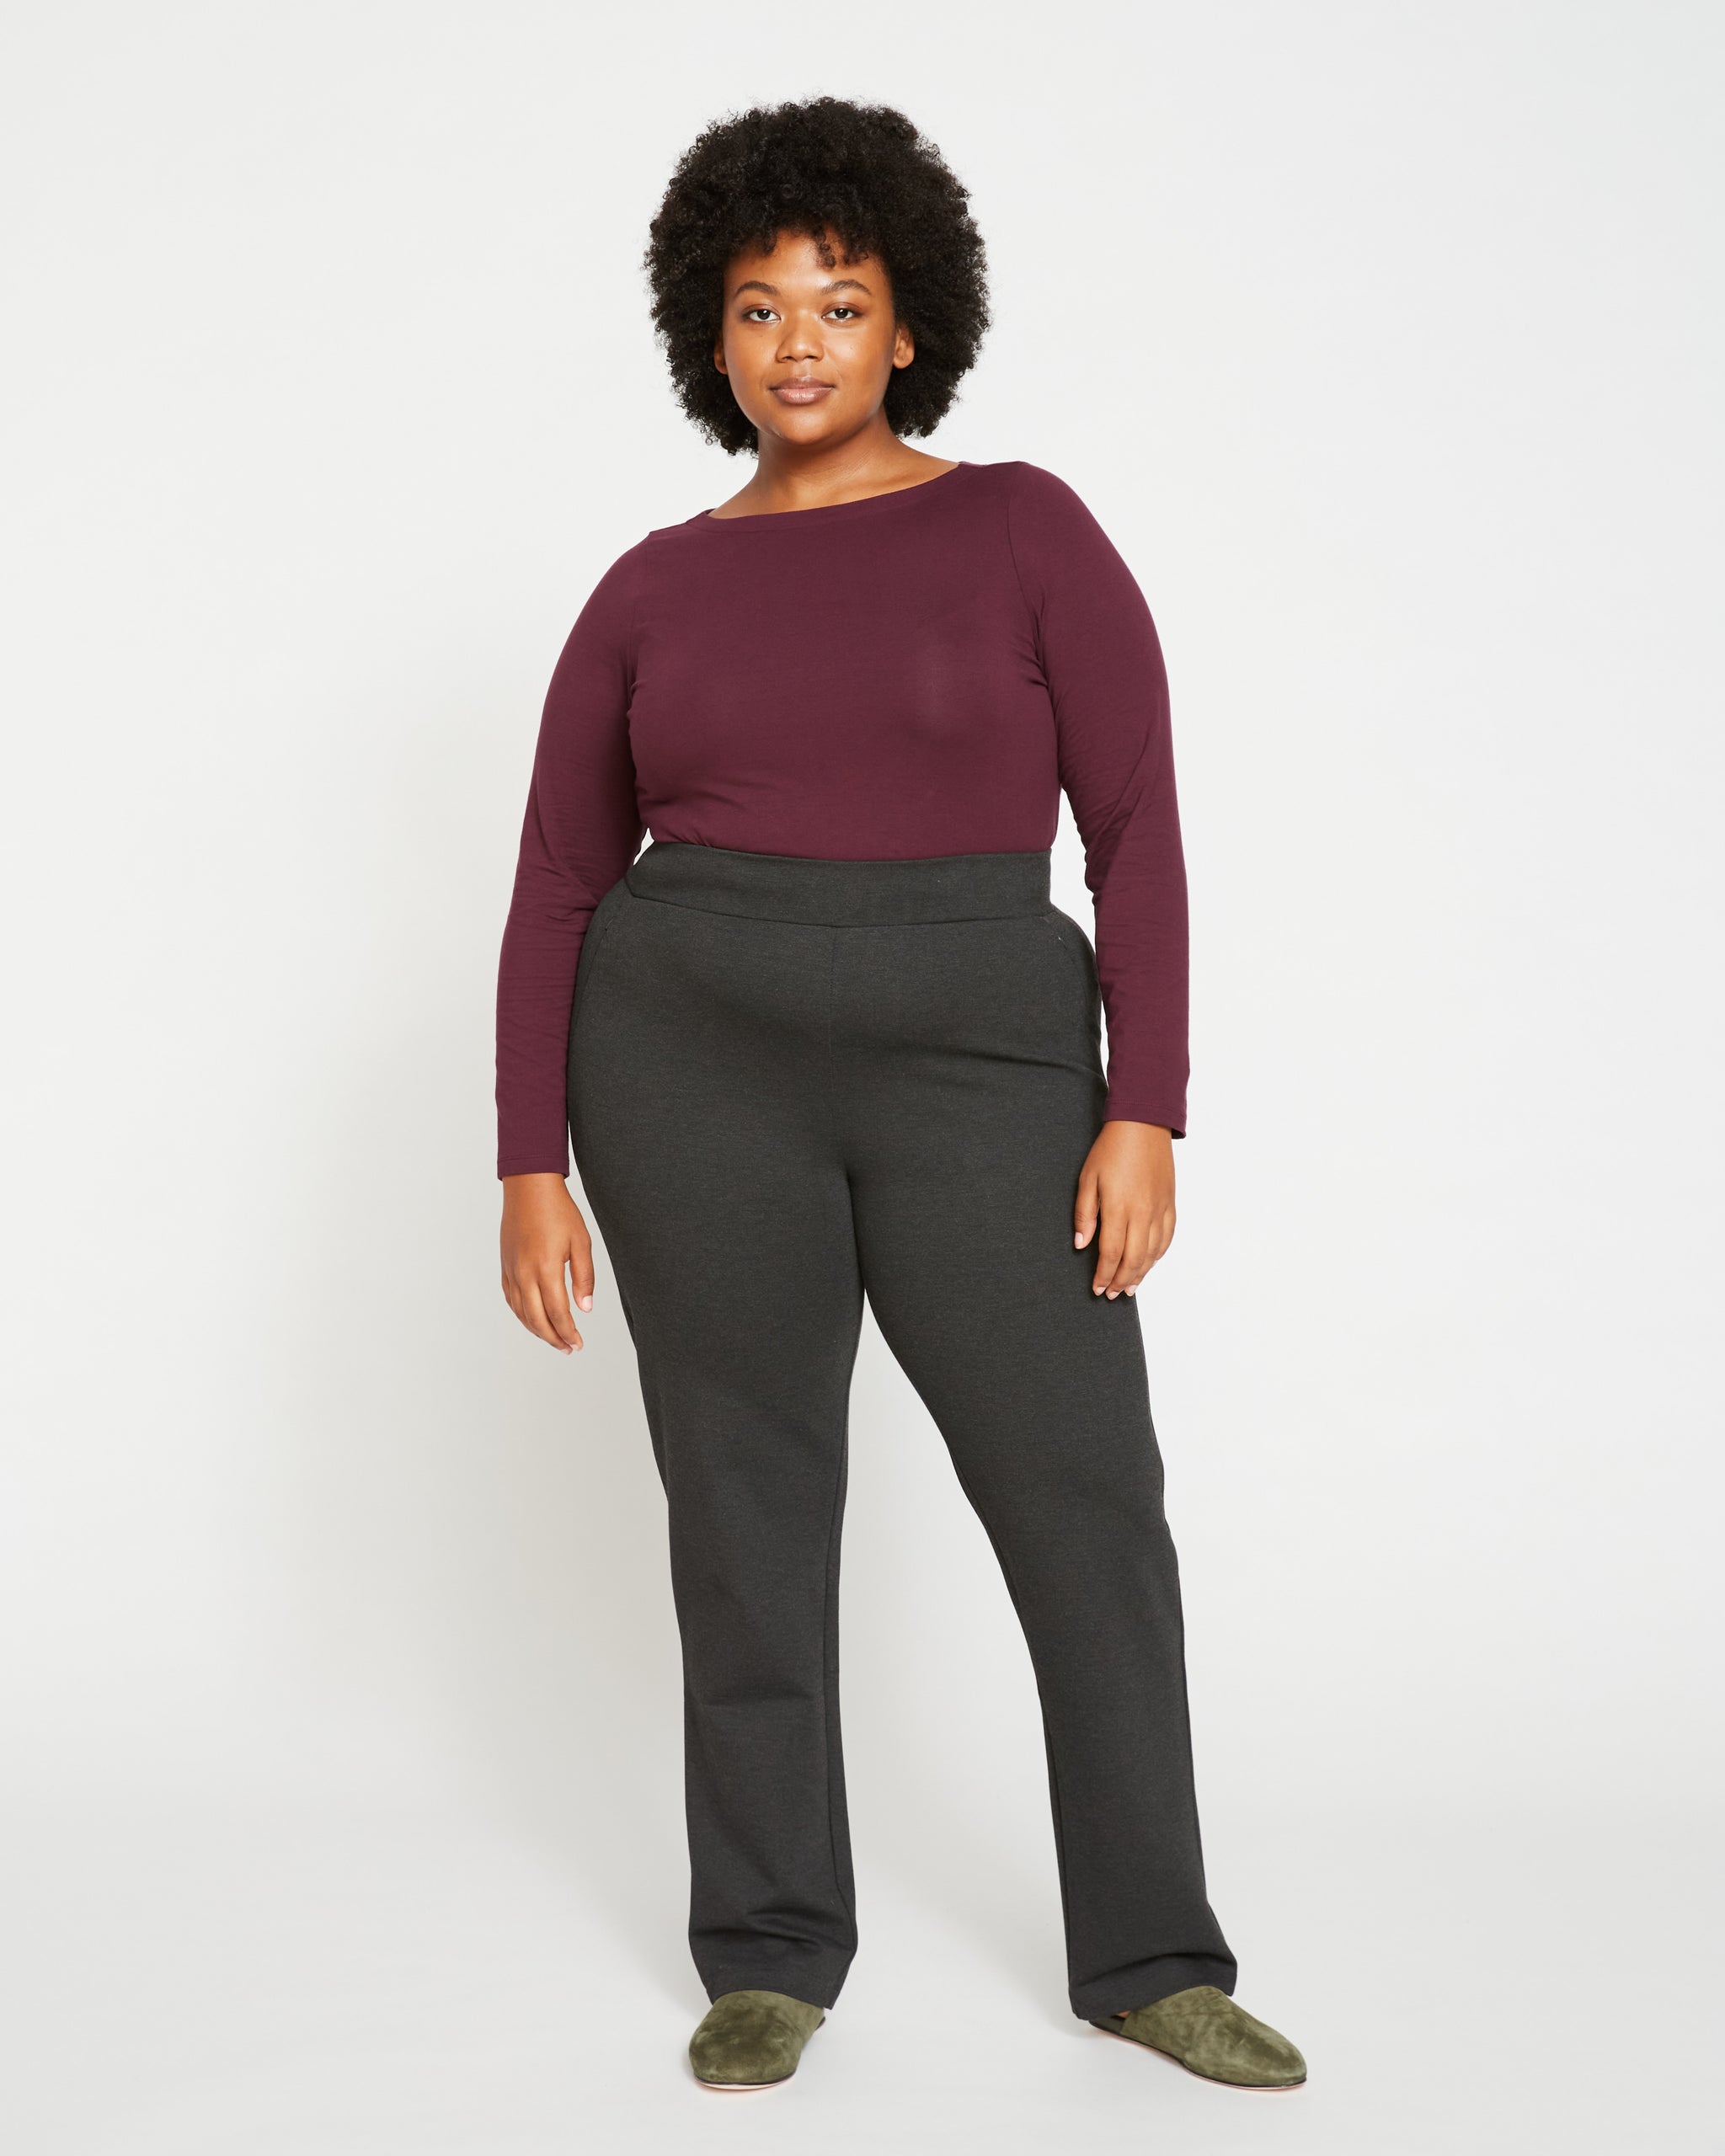 Terra & Sky Women's Plus Size Comfort Elastic Waistband Ponte Pant 